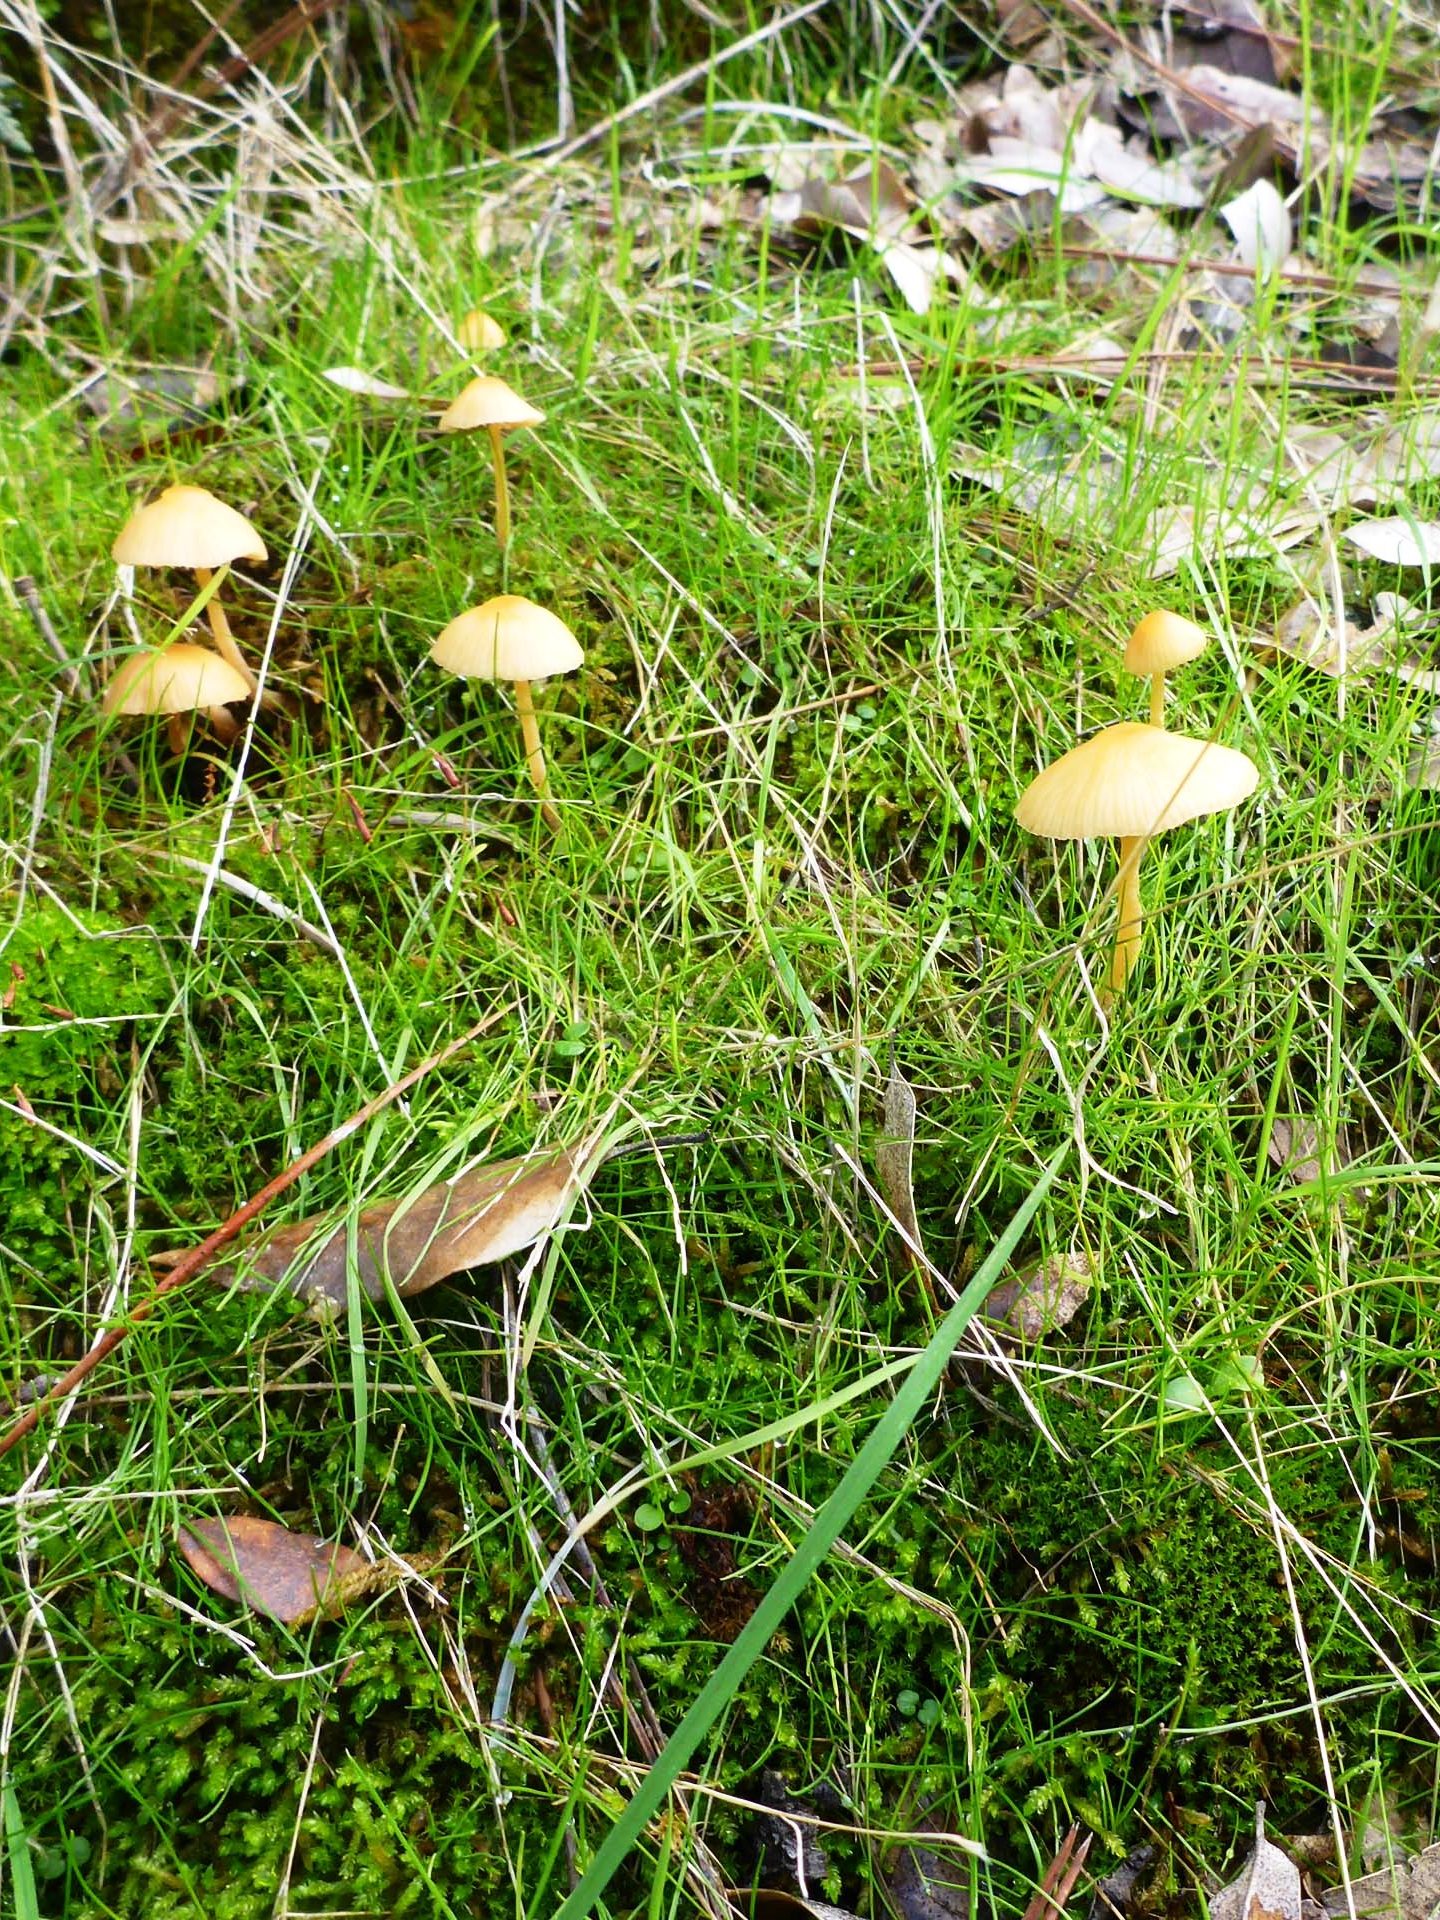 Cute little yellow, egg-shaed mushrooms. D. Burk.